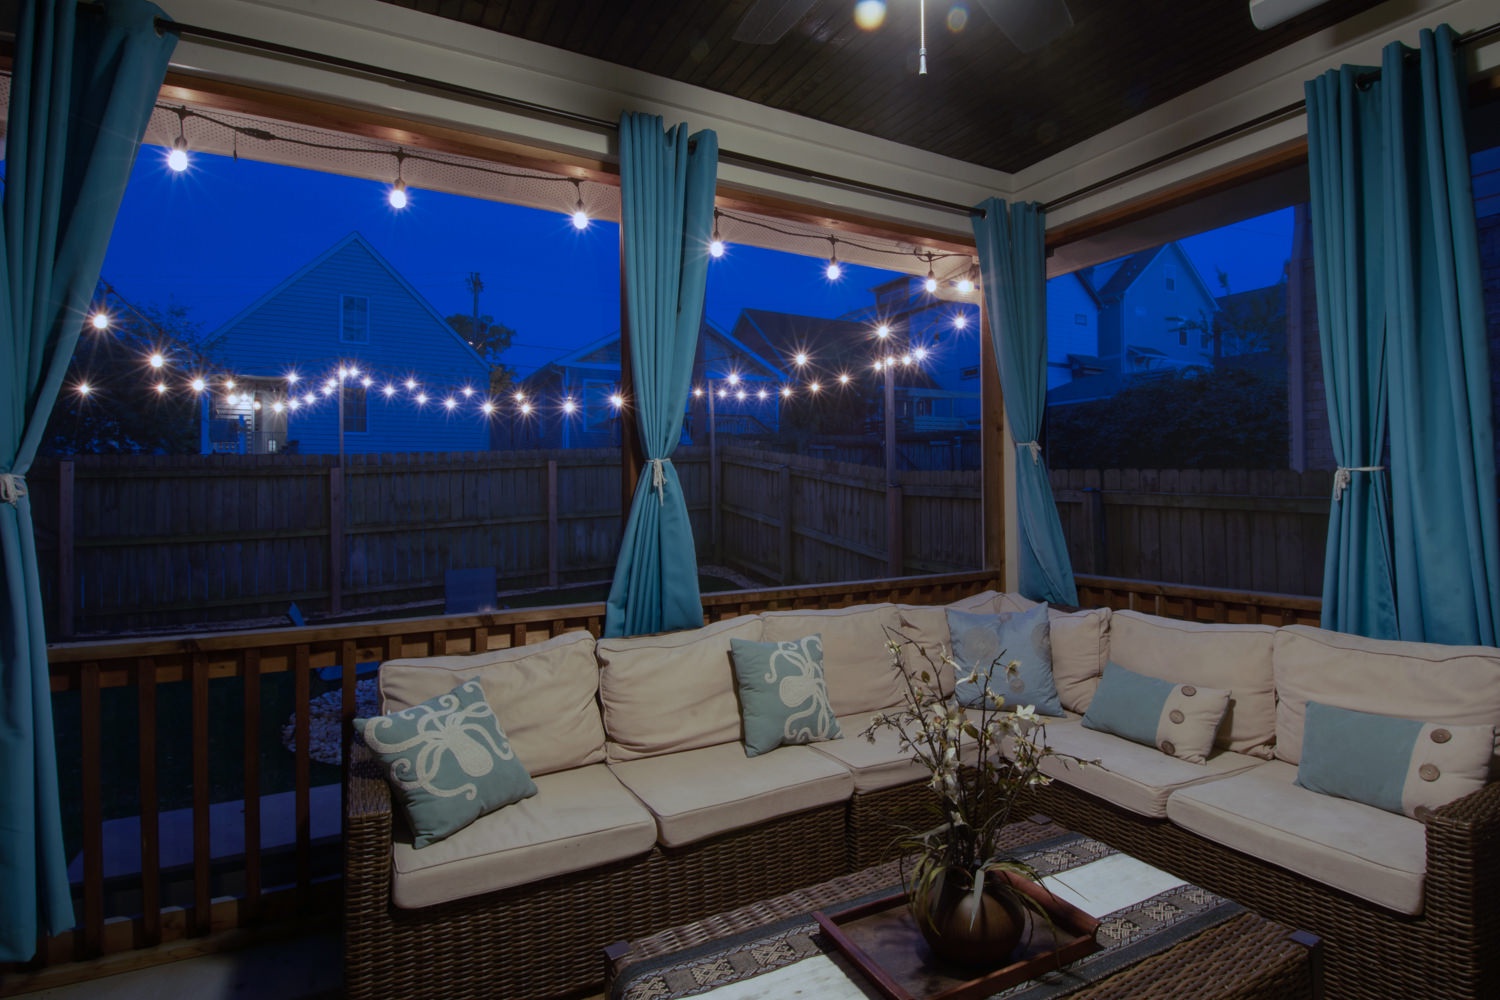 Backyard covered patio seating at night